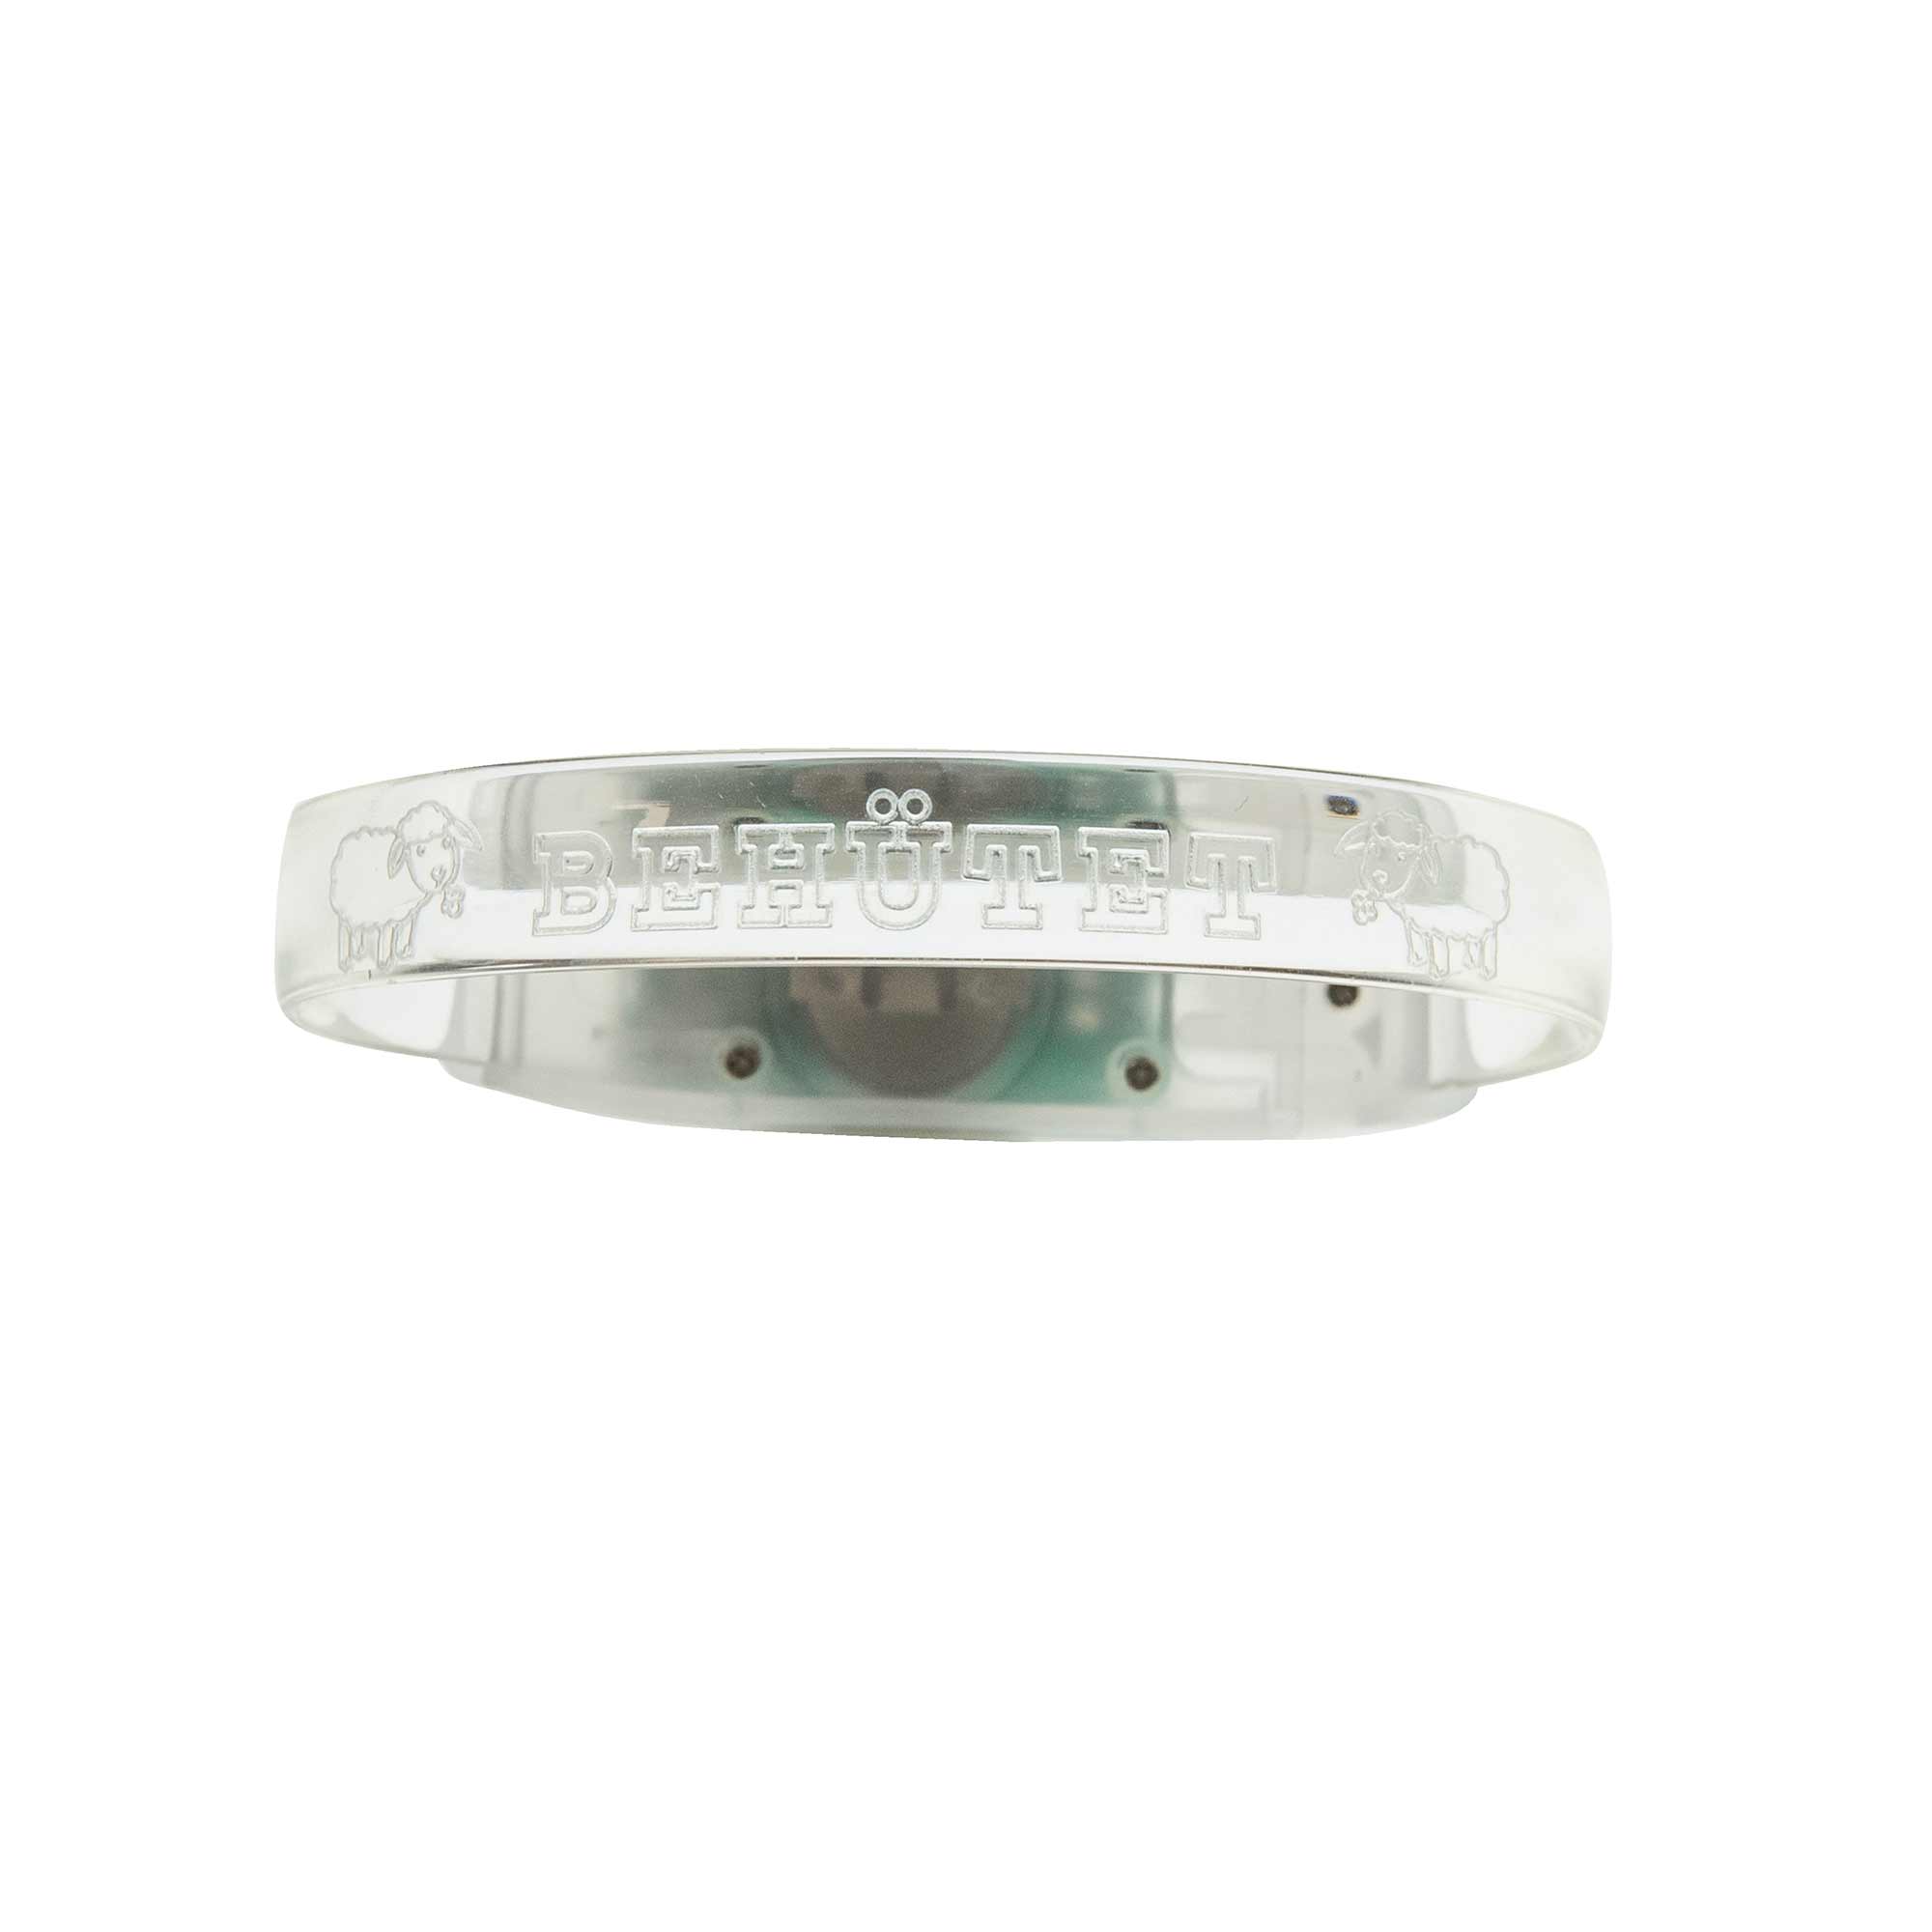 LED-Armband - Behütet & Schaf